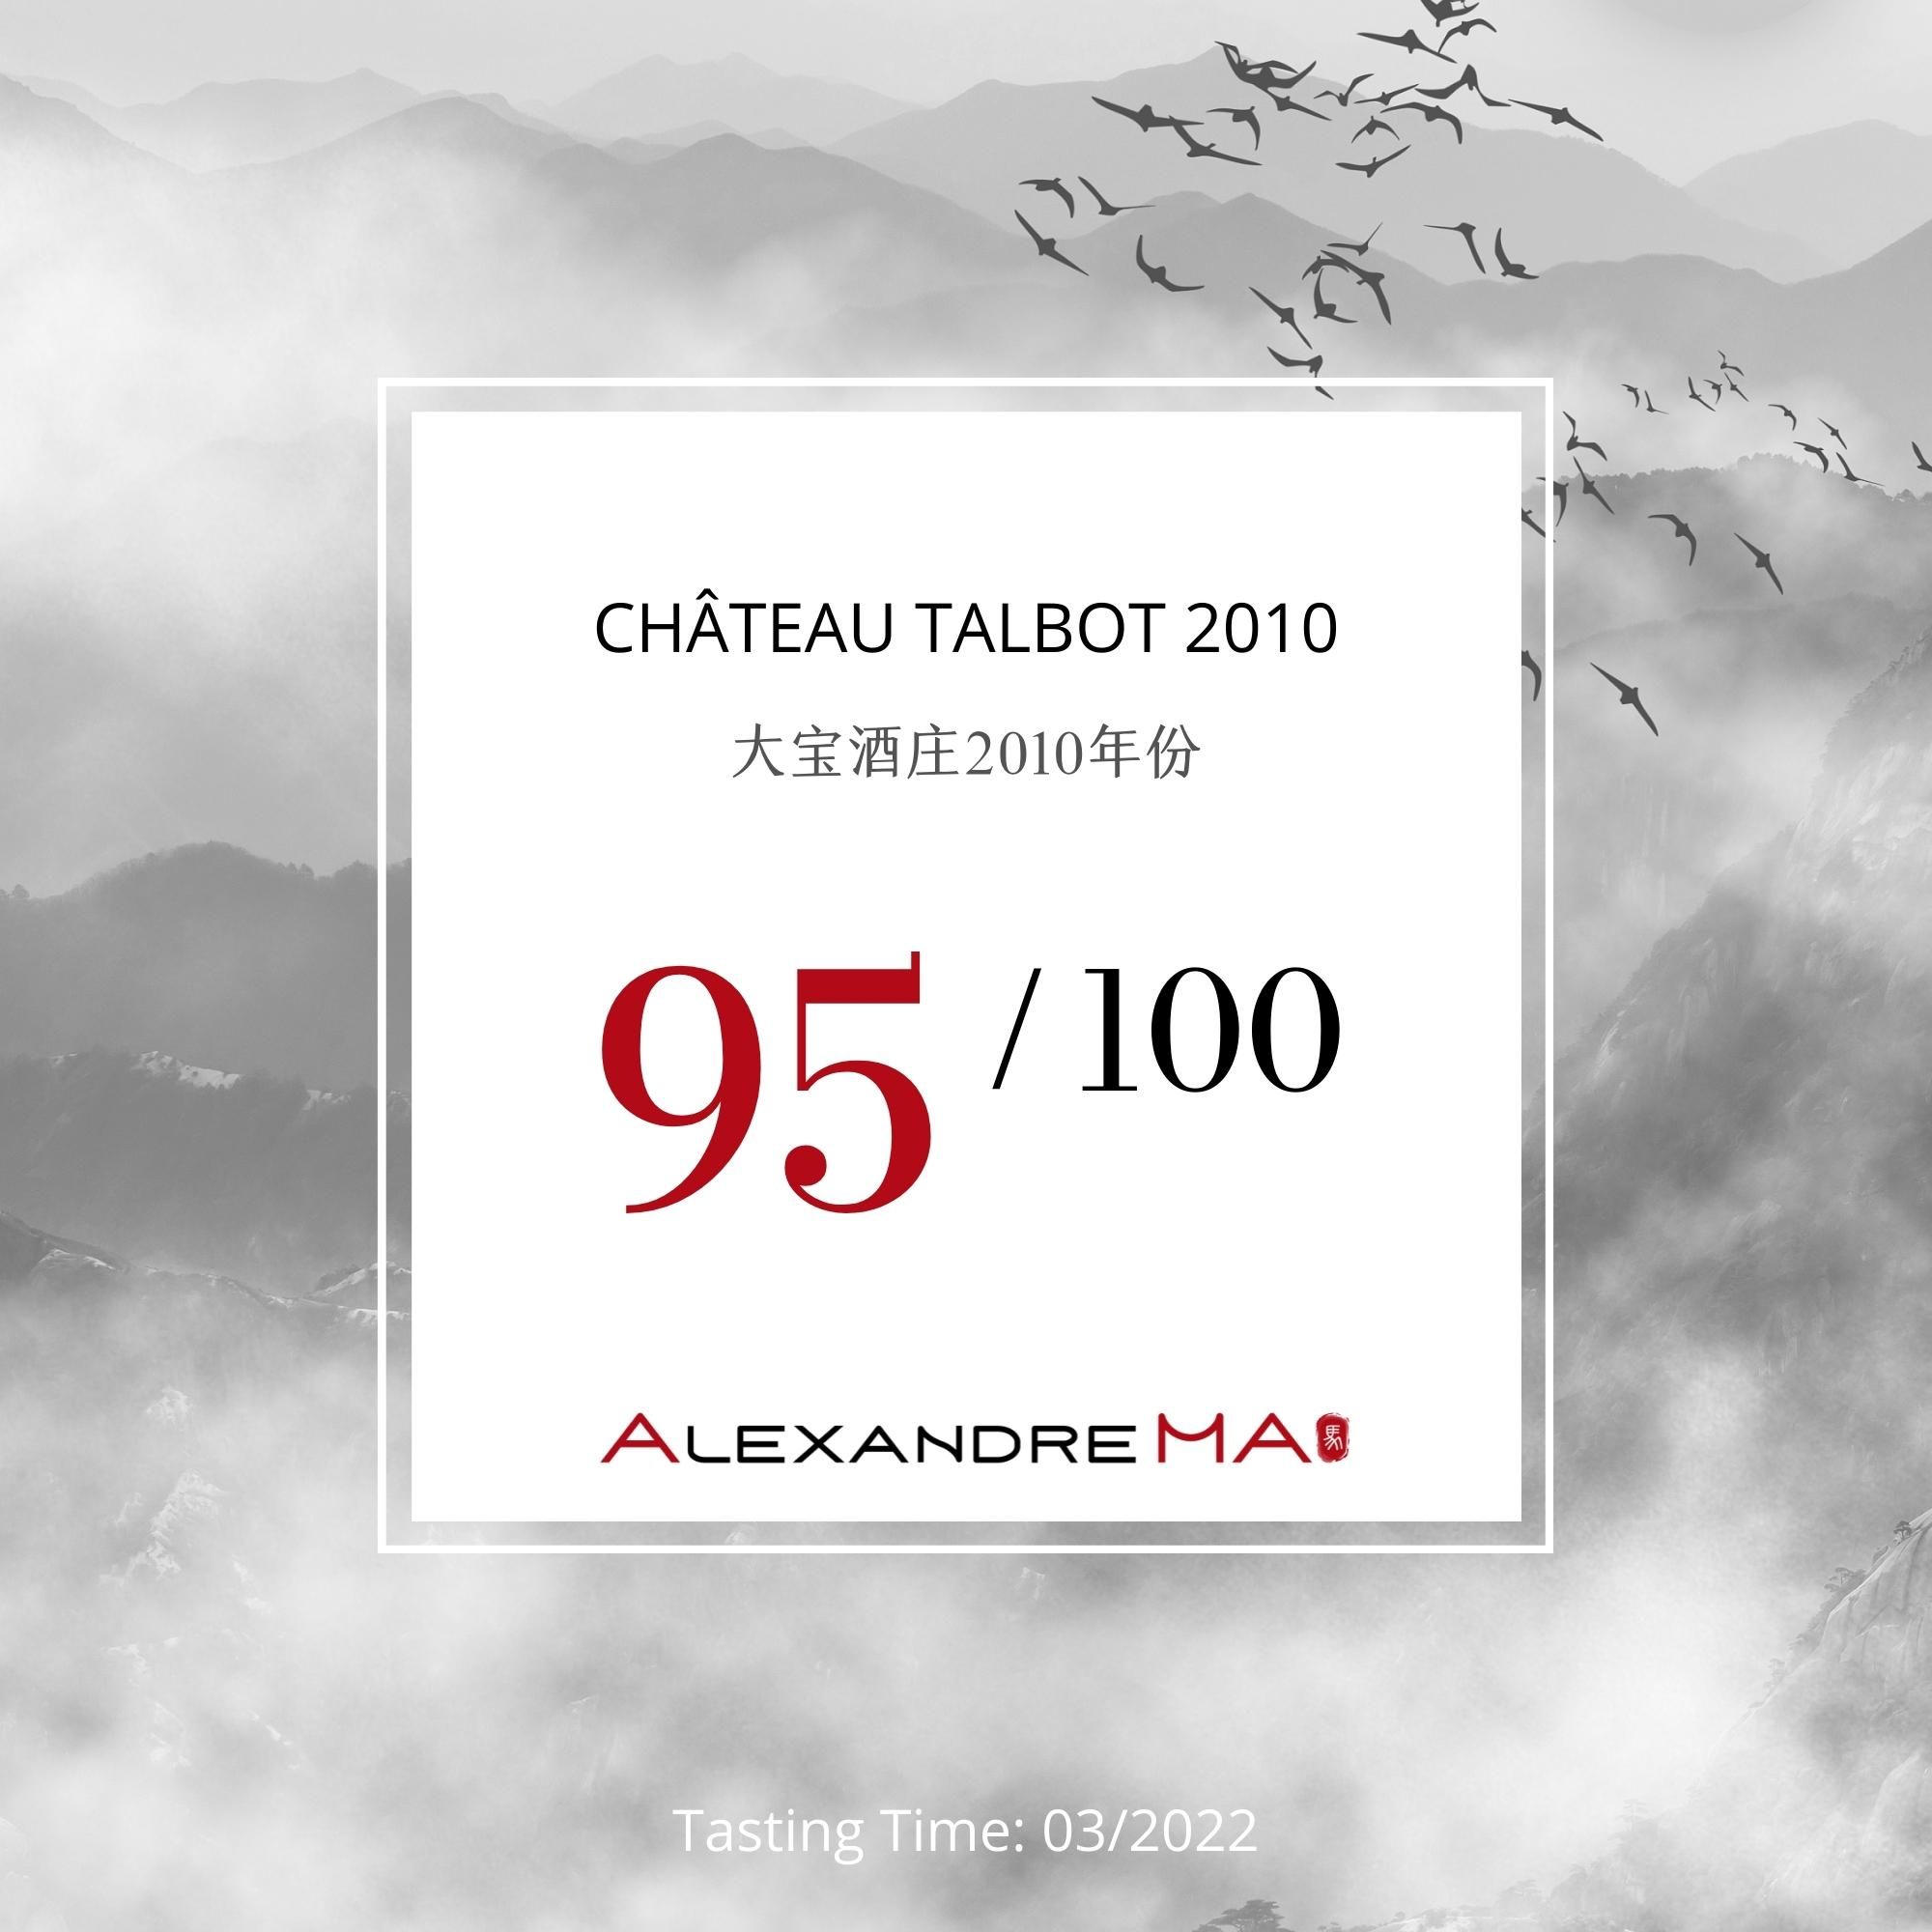 Château Talbot 2010 大宝酒庄 - Alexandre Ma